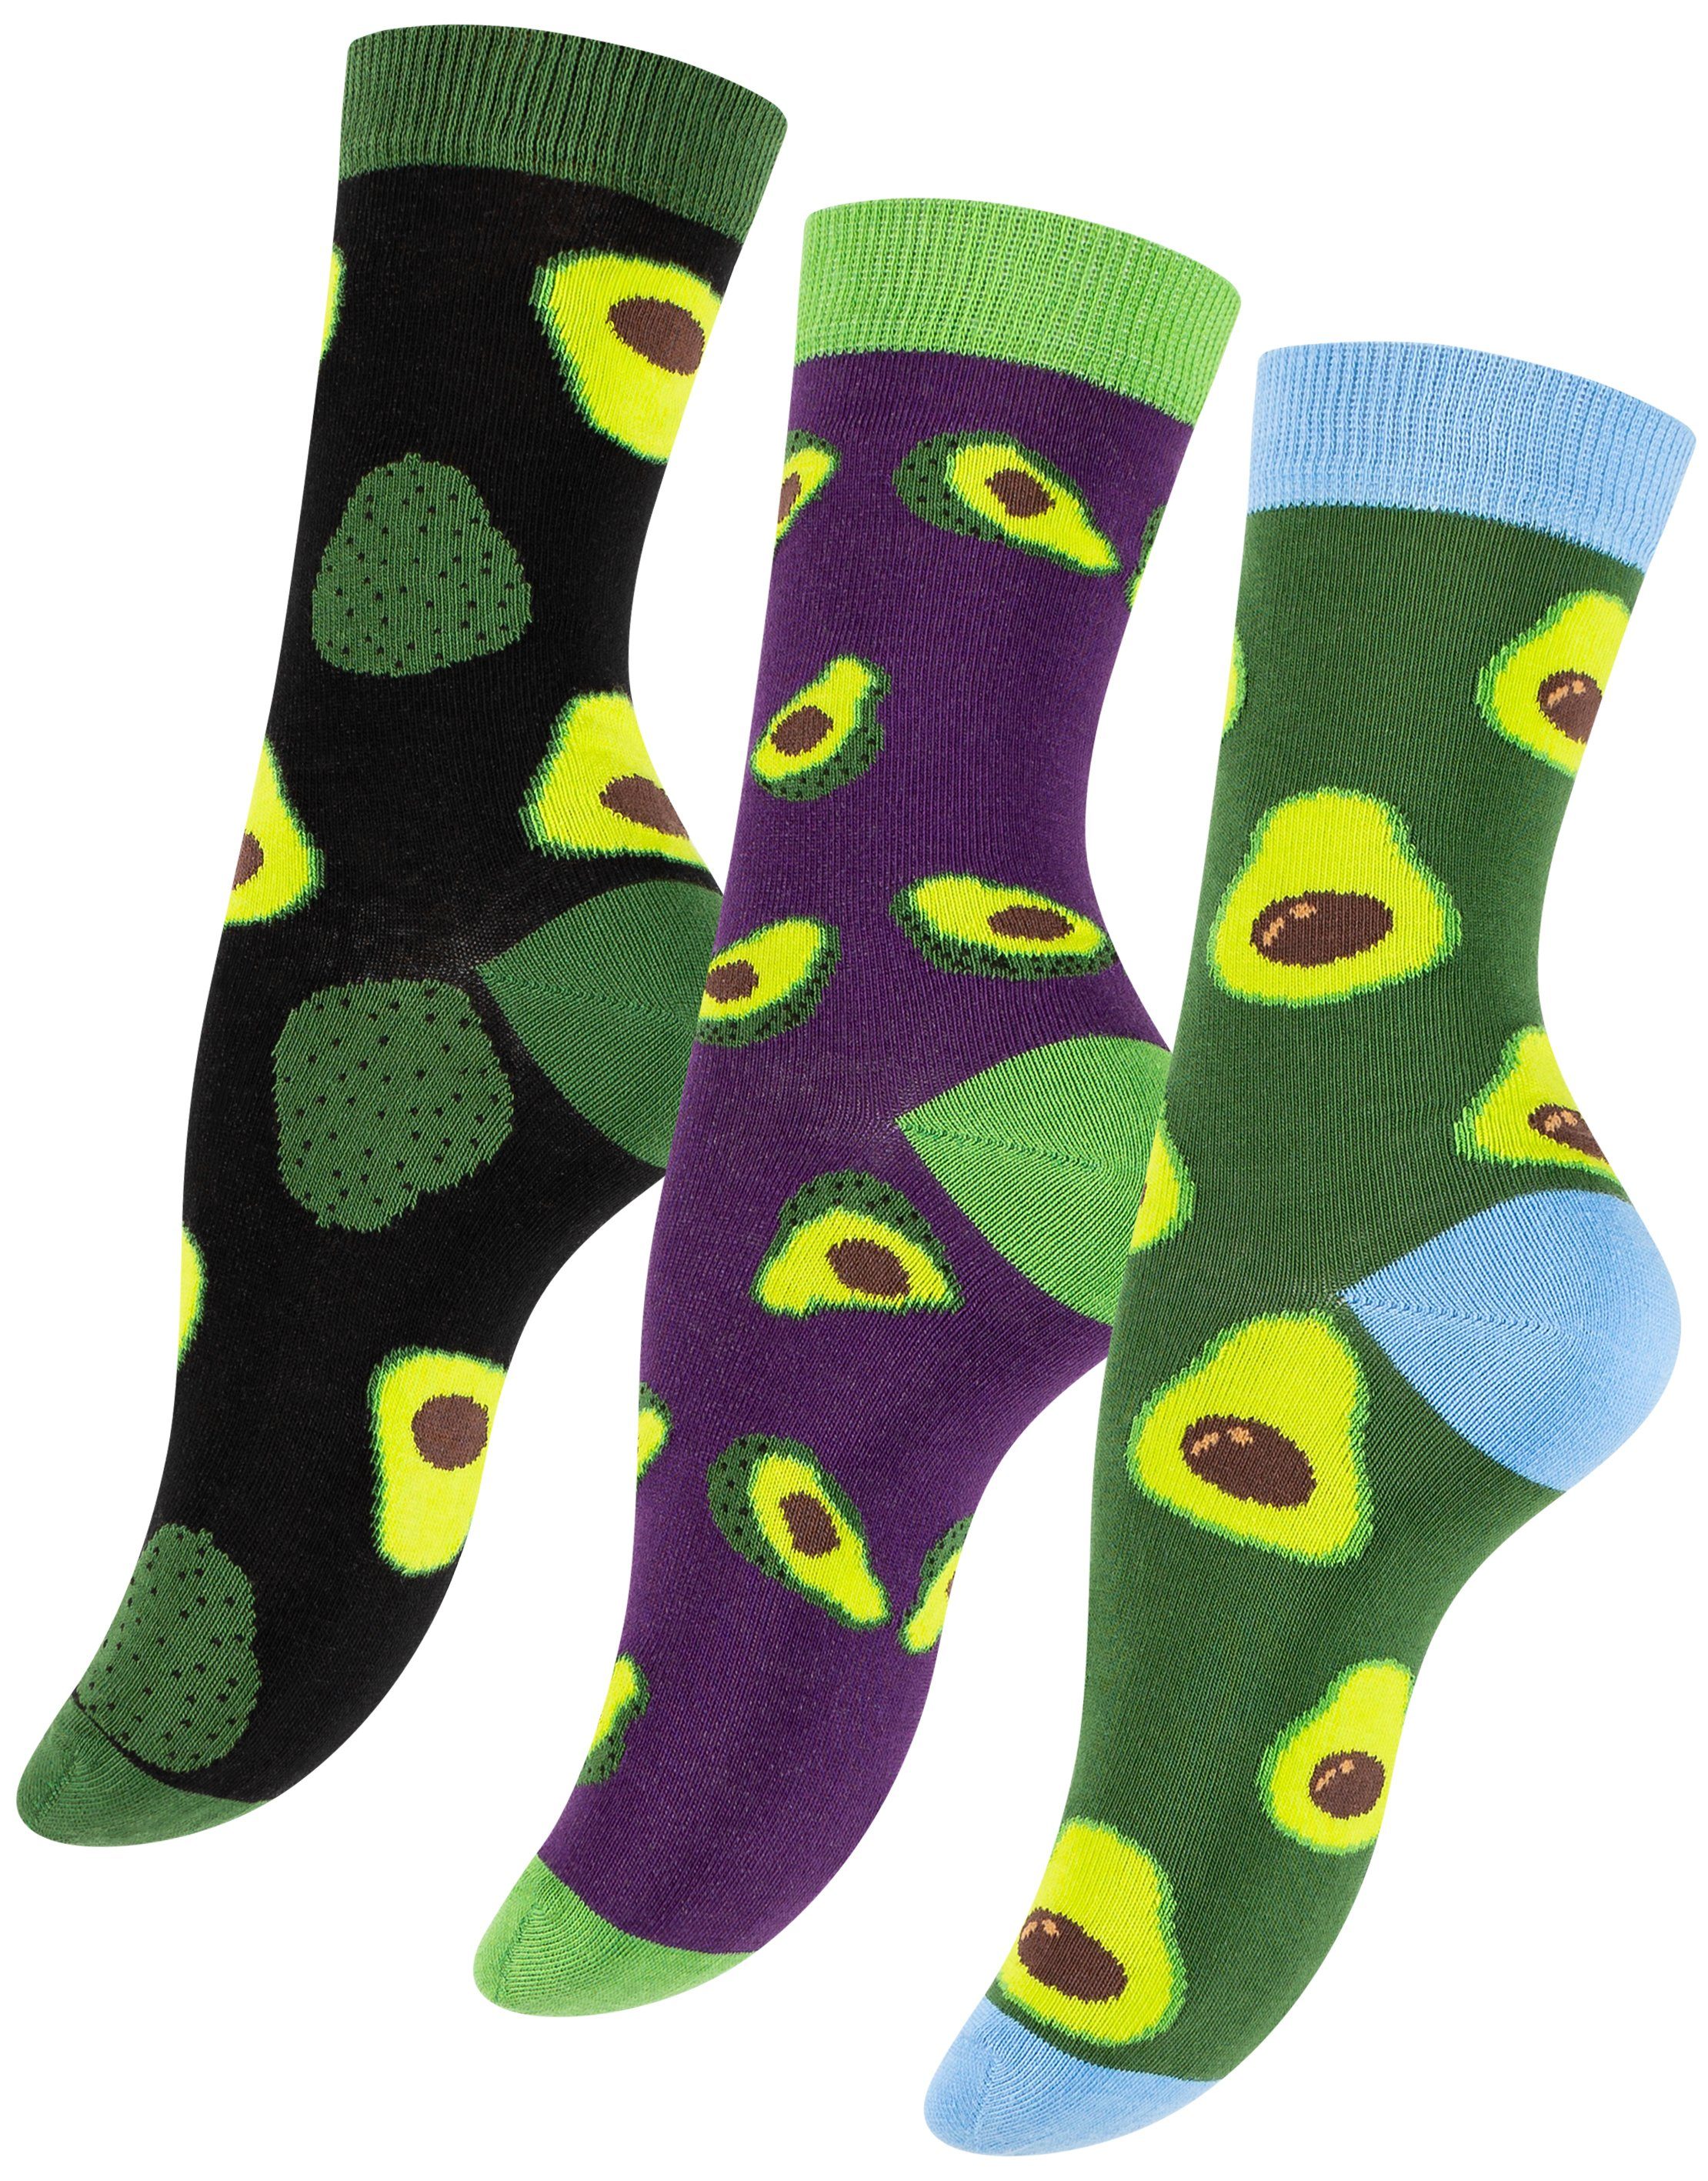 Vincent Creation® Socken (3-Paar) im Avocado Design